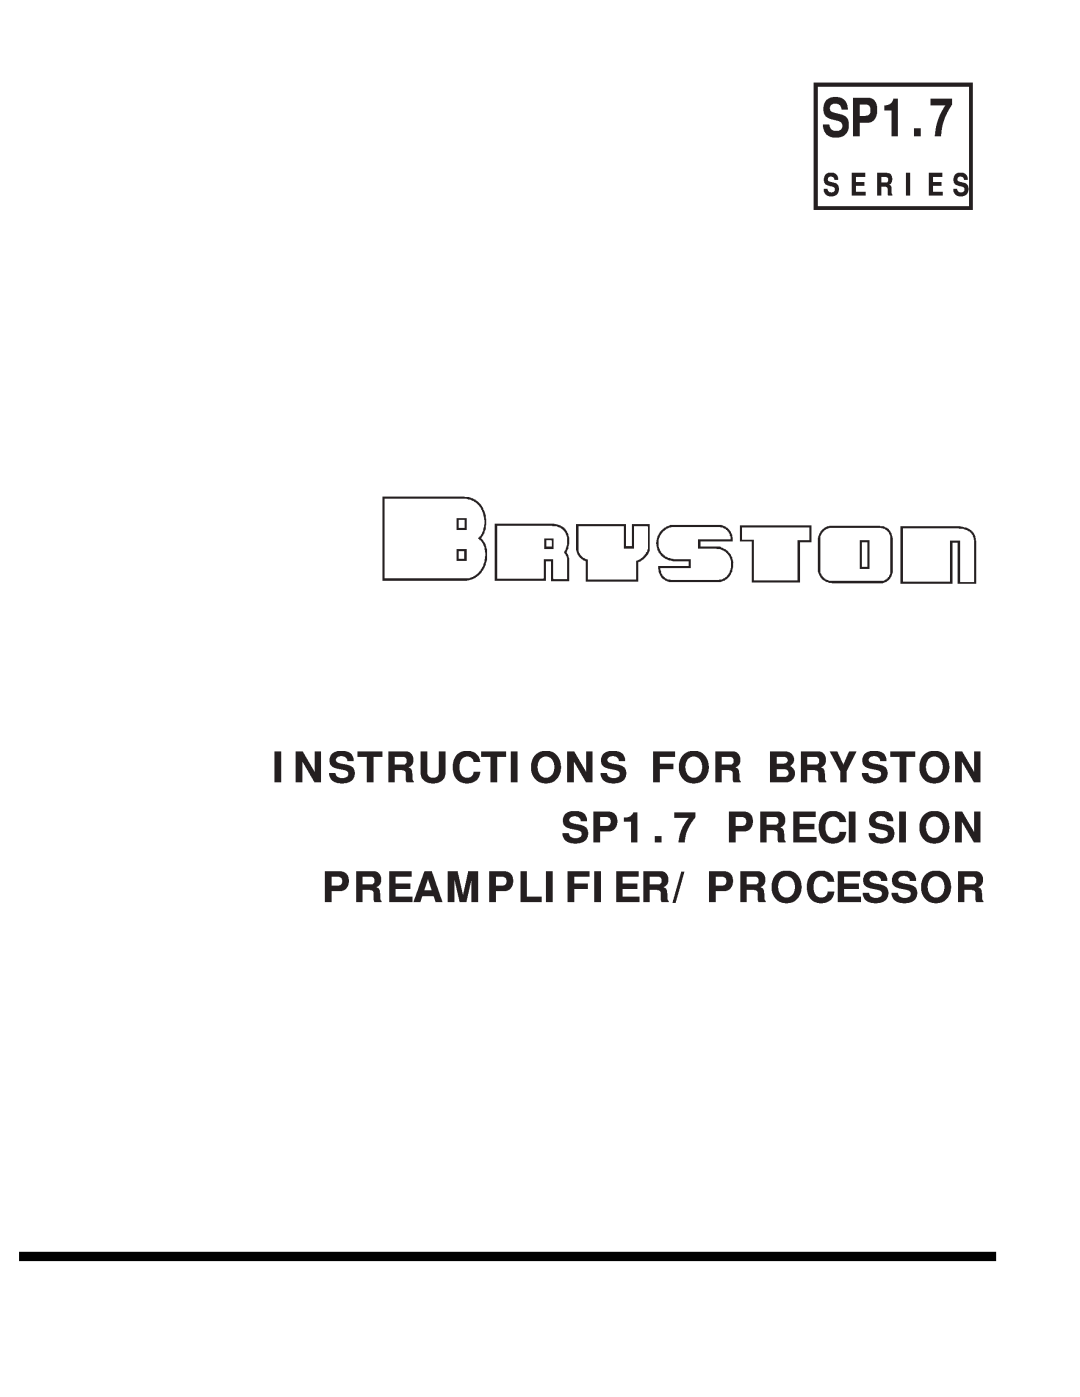 Bryston SP1.7 Series manual S E R I E S 